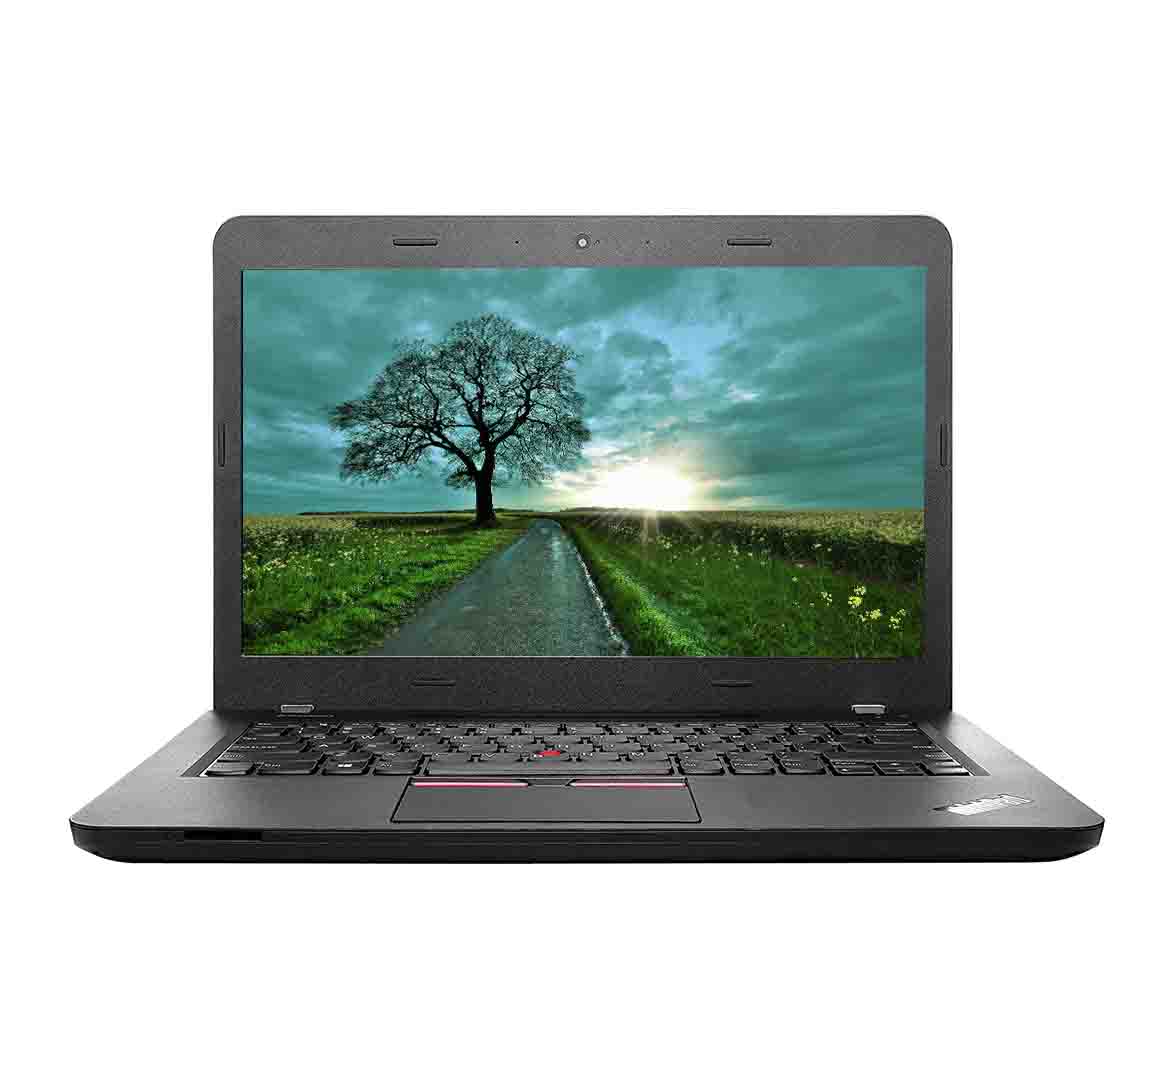 Lenovo ThinkPad E450 Business Laptop, Intel Core i3-4th Generation CPU, 8GB RAM, 256GB SSD, 14 inch Display, Windows 10, Refurbished Laptop